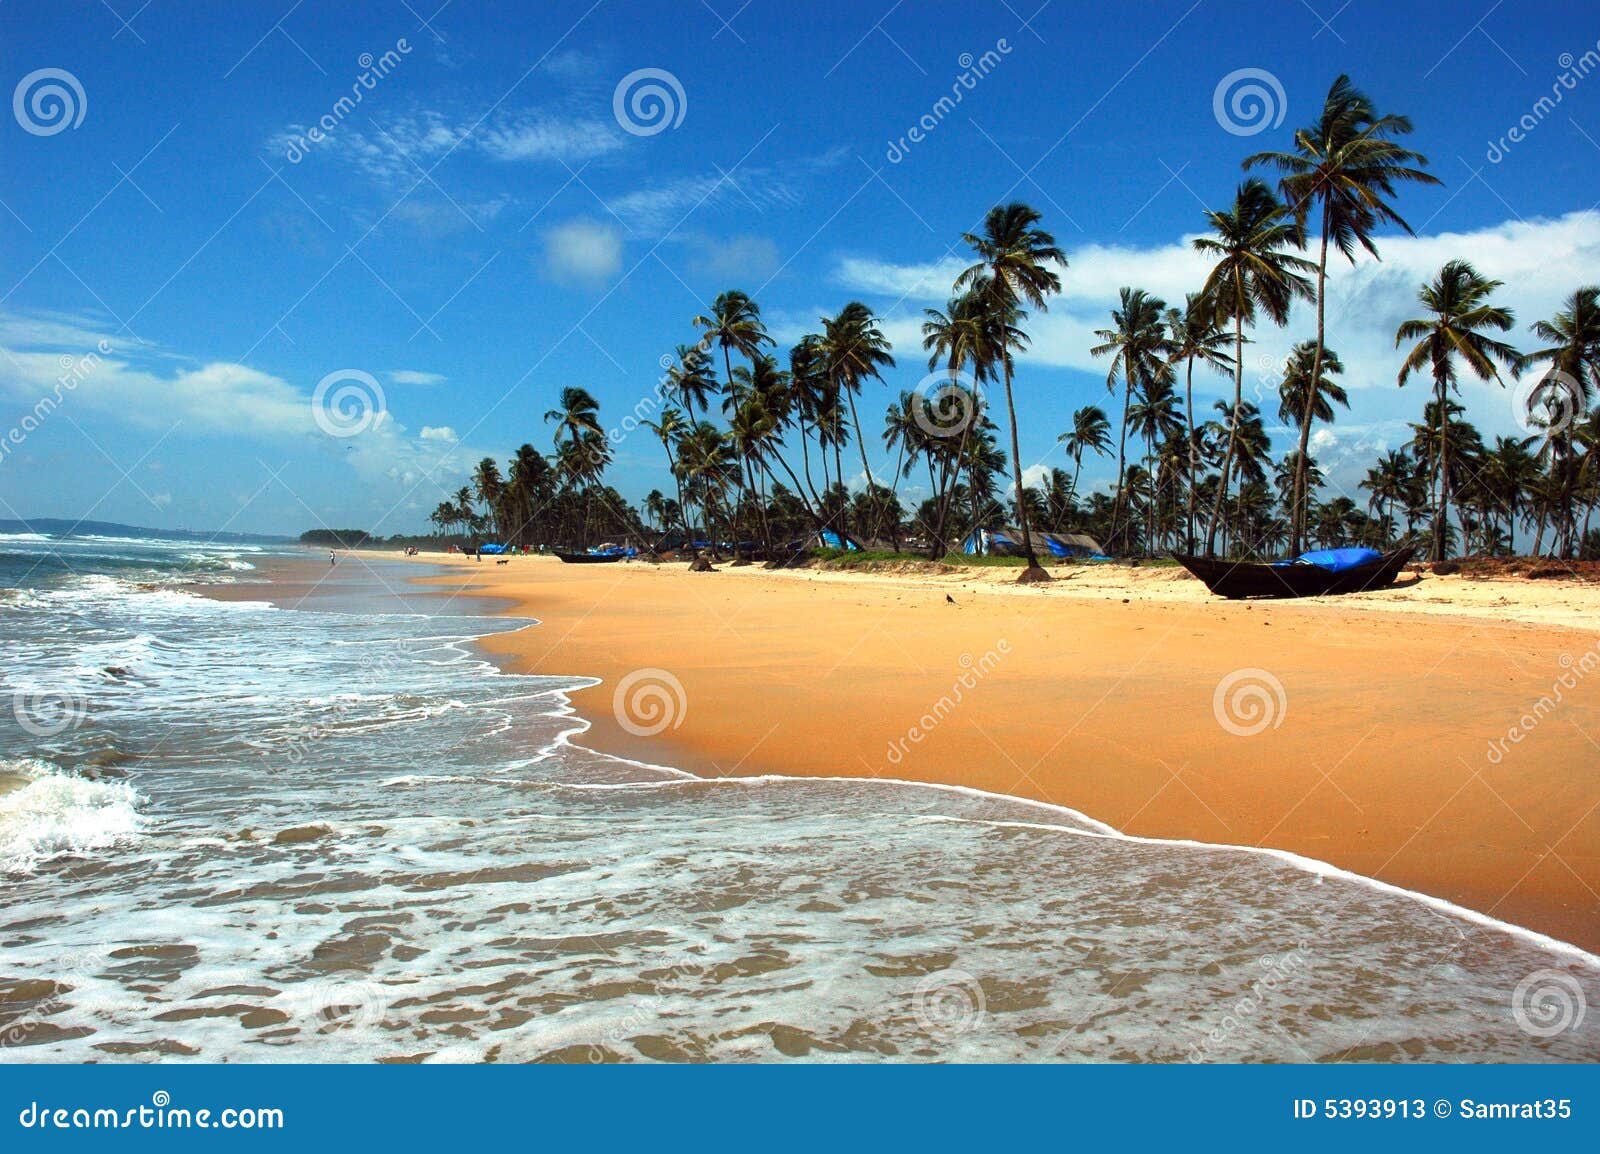 the beach of goa-india.